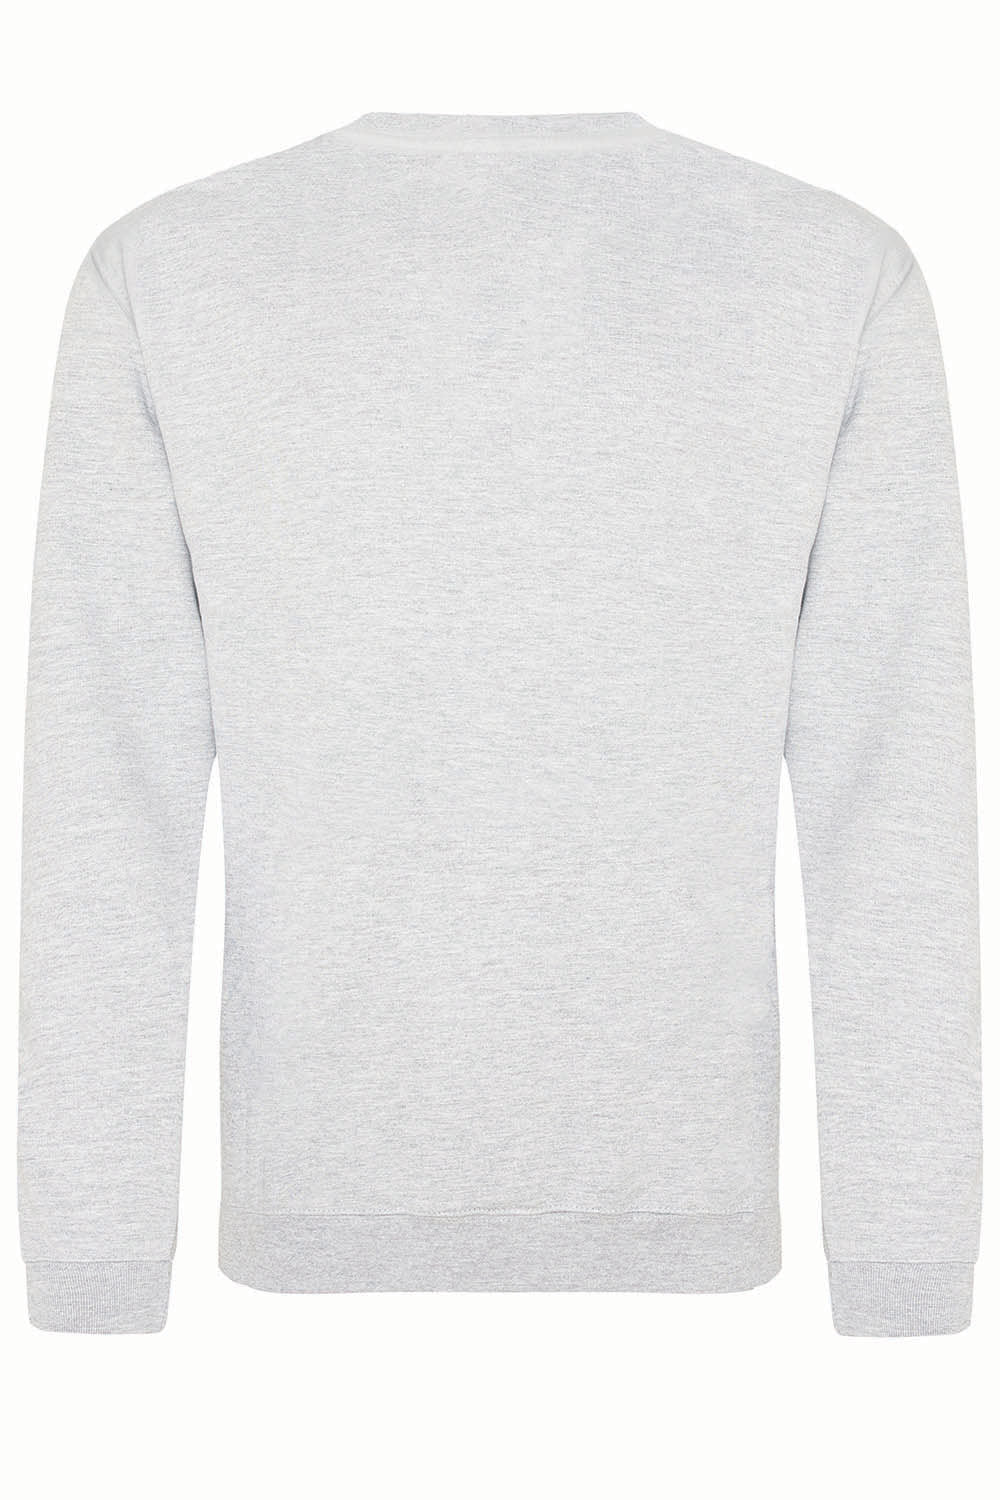 Unisex Santa Monica Sweatshirt - Grey